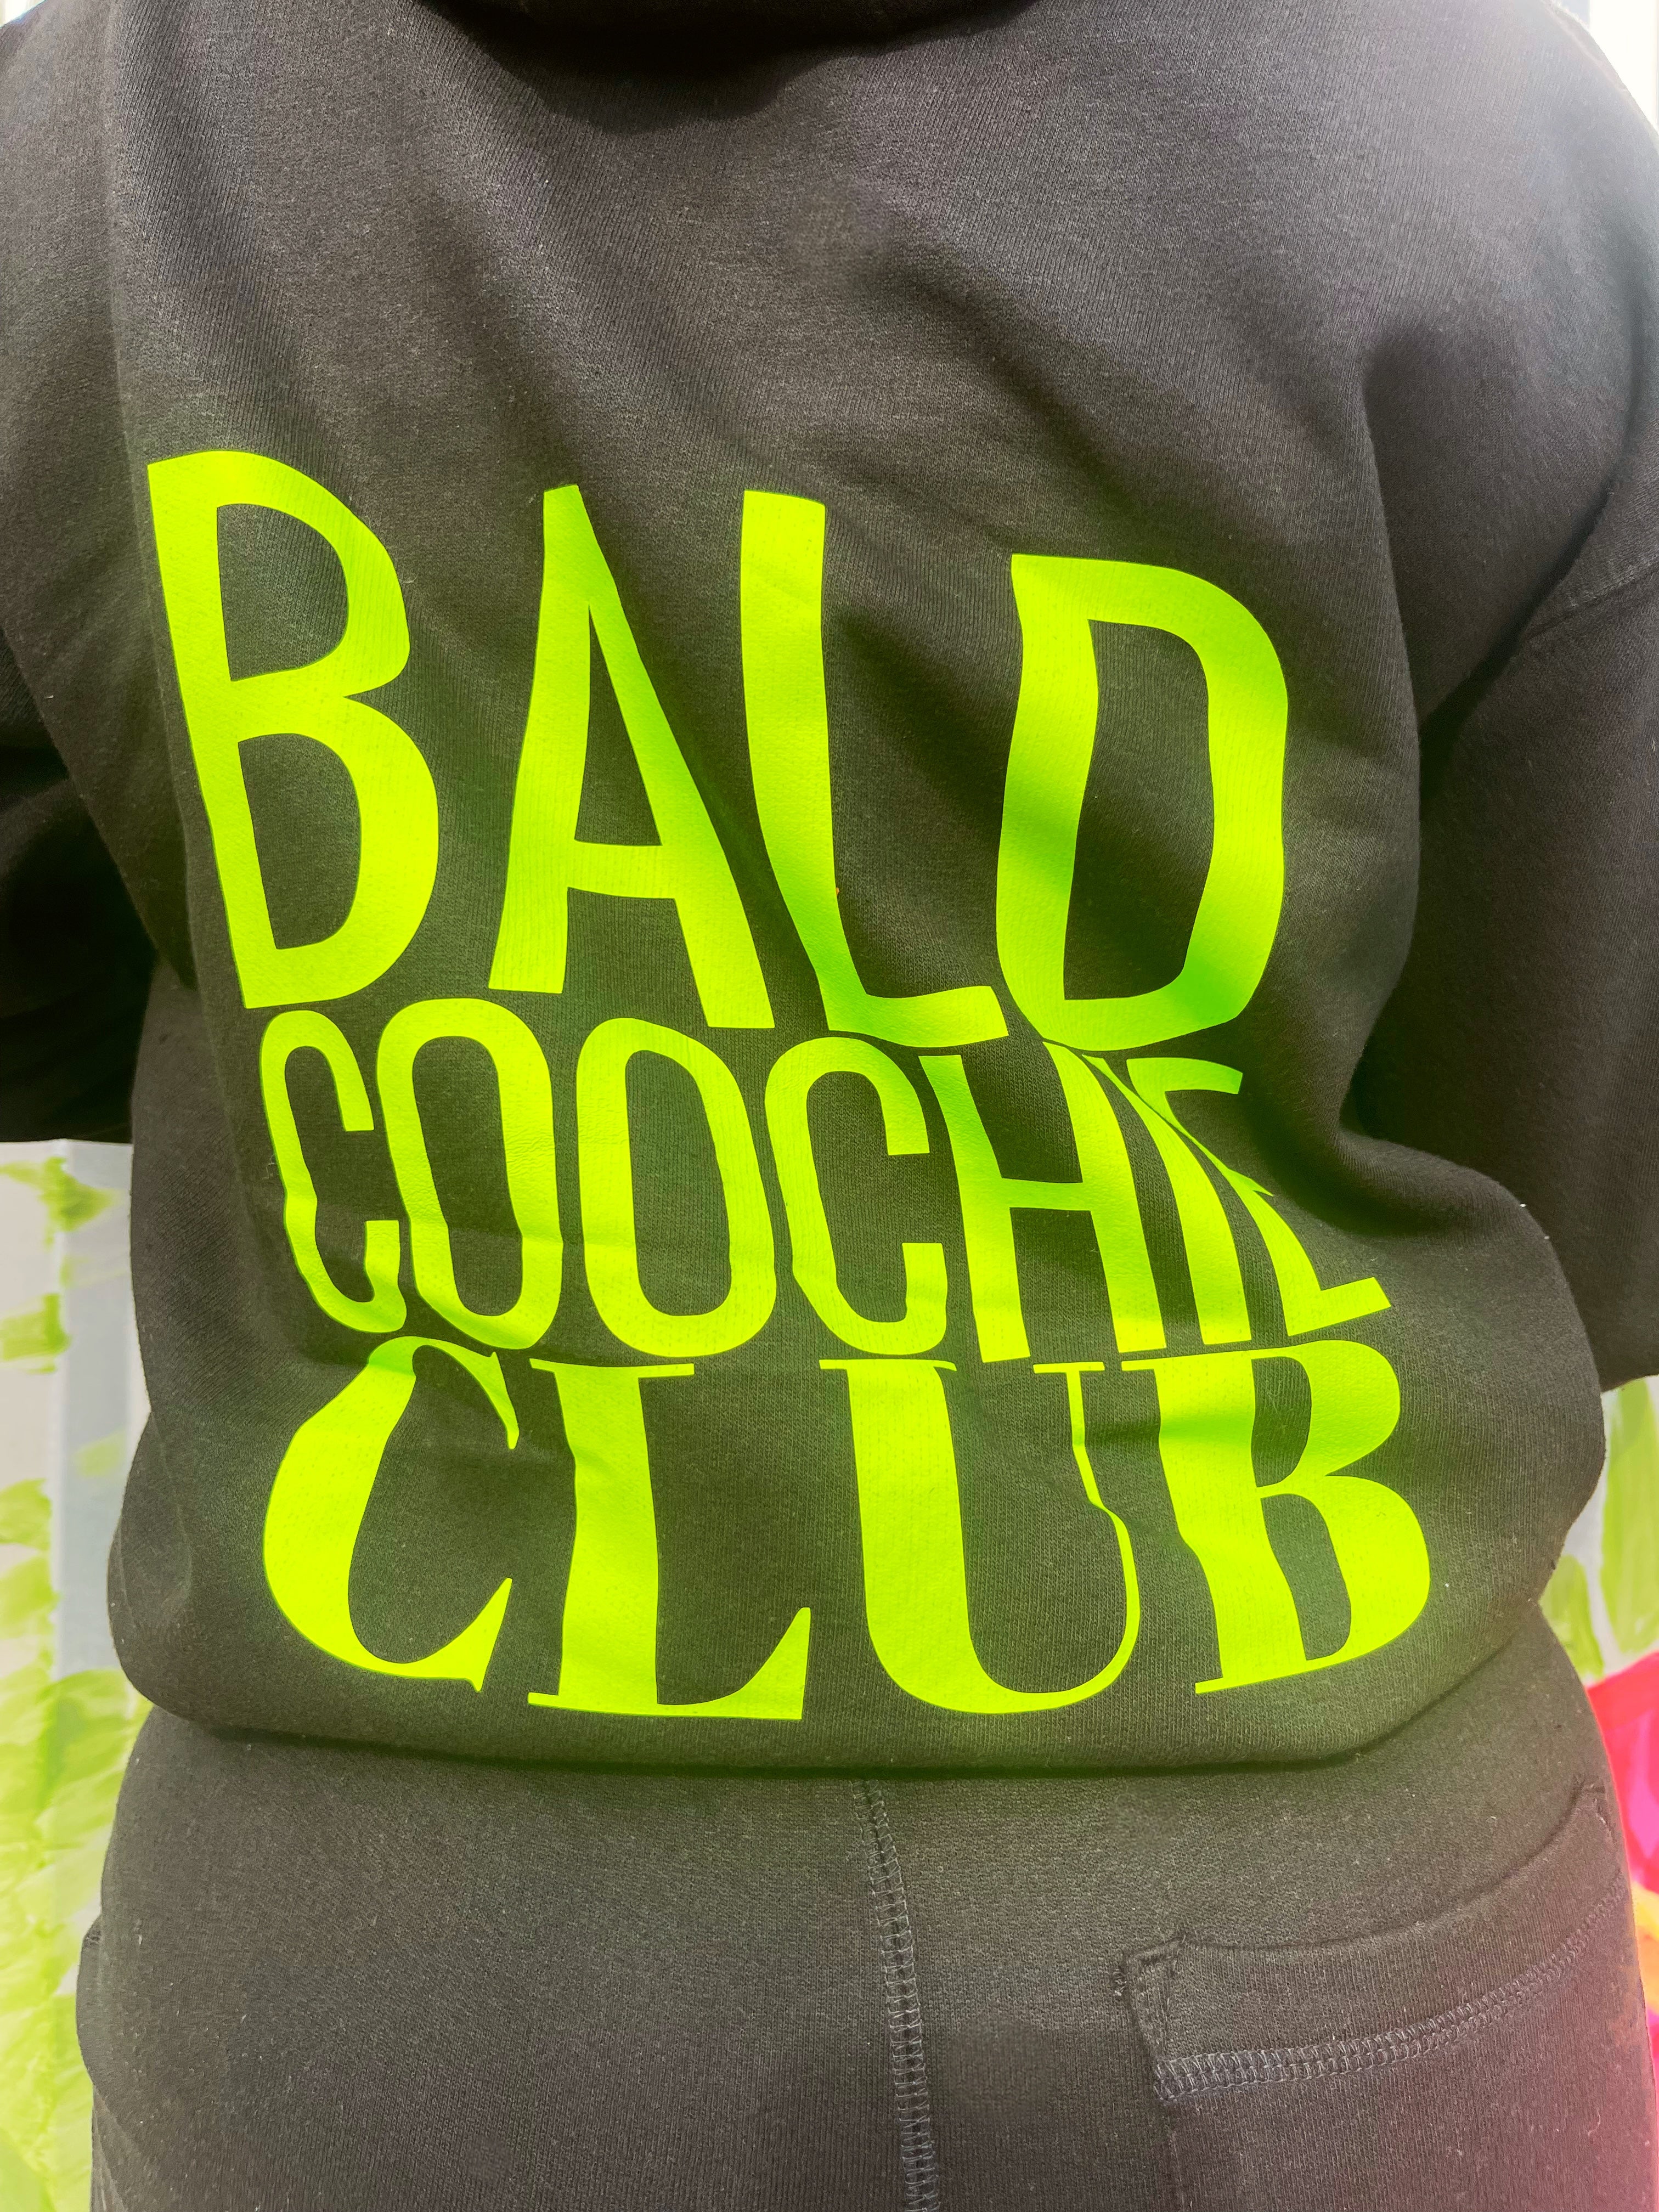 Bald Coochie Club Hoodie